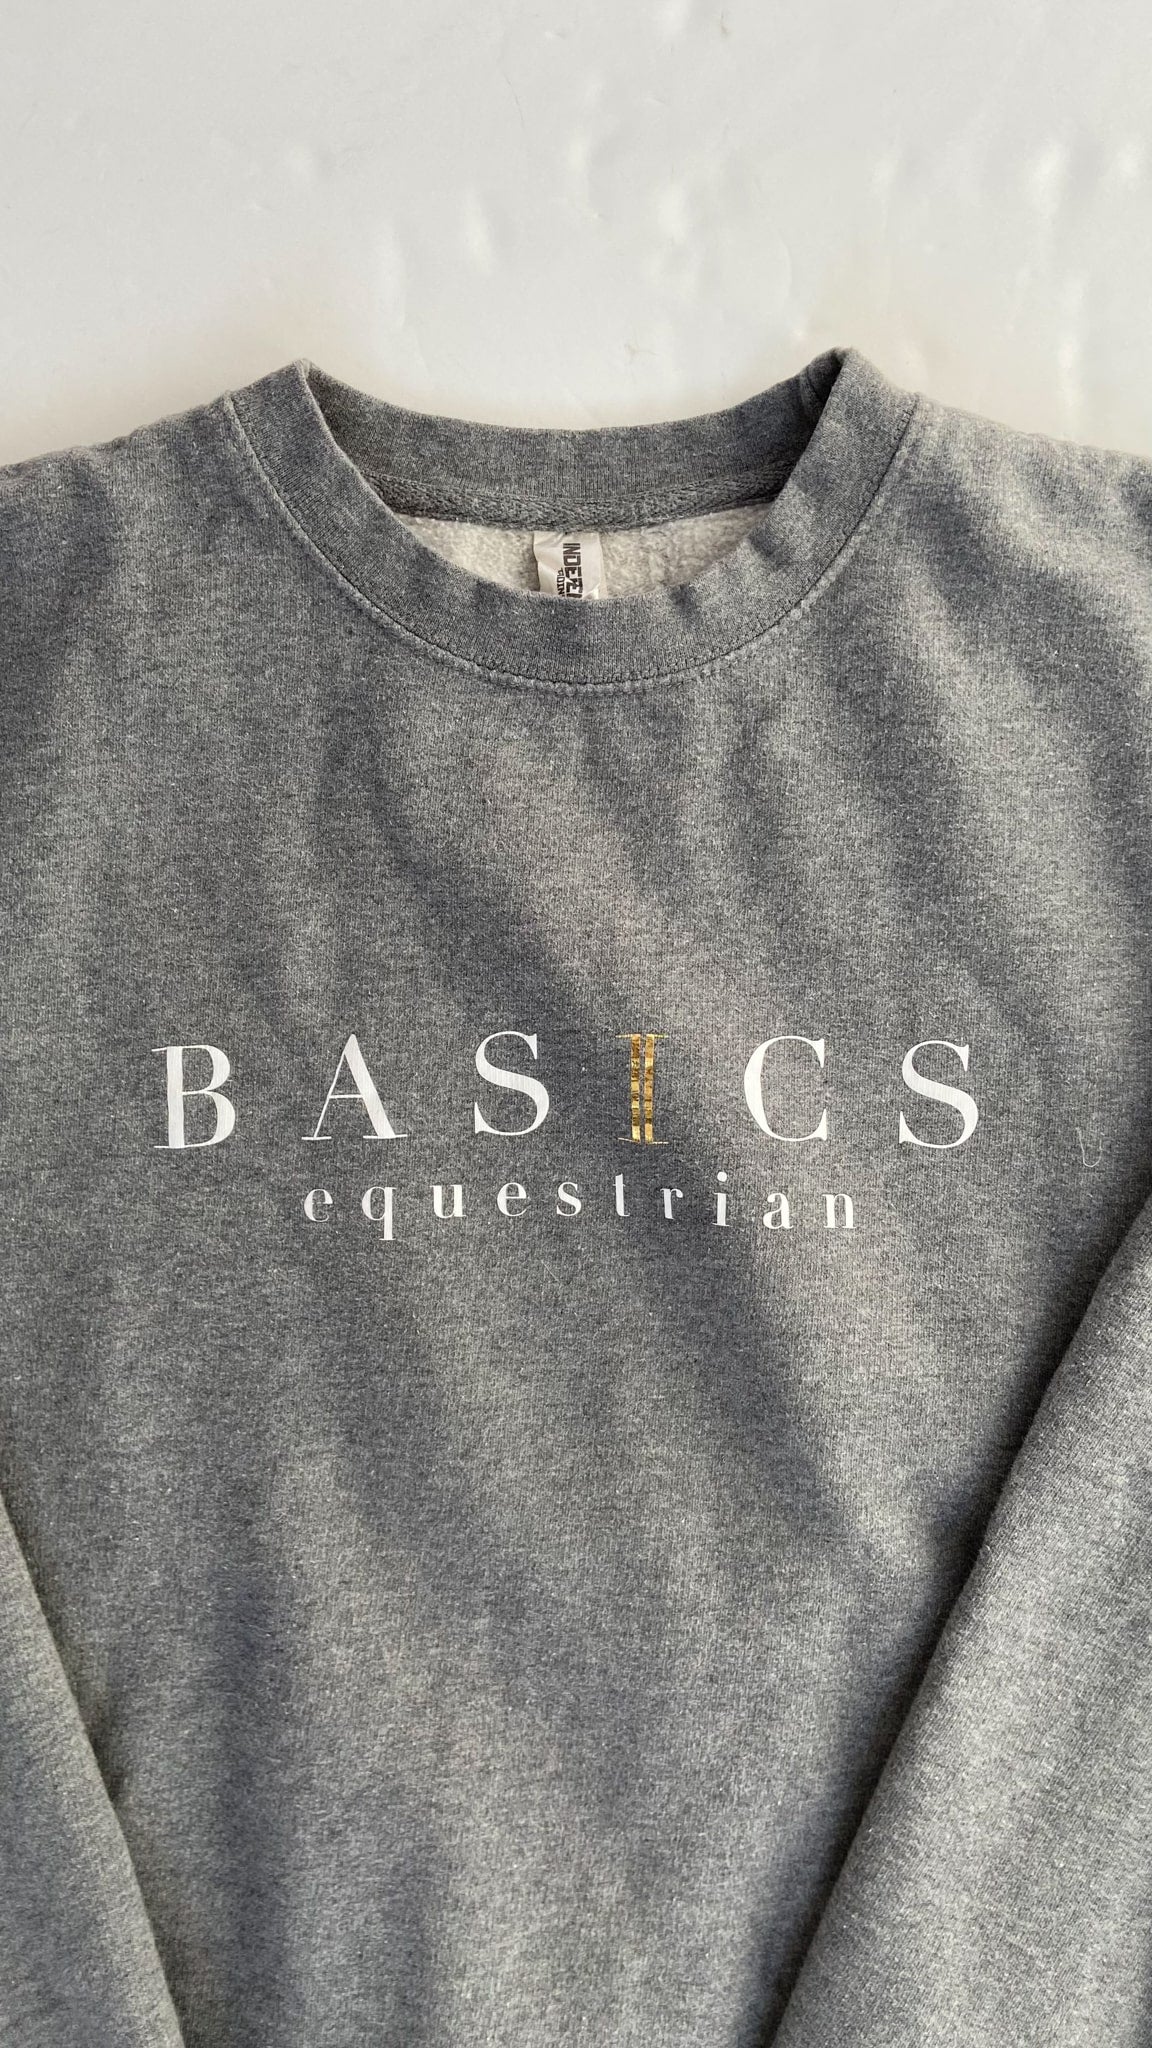 Basics Equestrian Crew Neck Sweater - Grey - Women's Medium